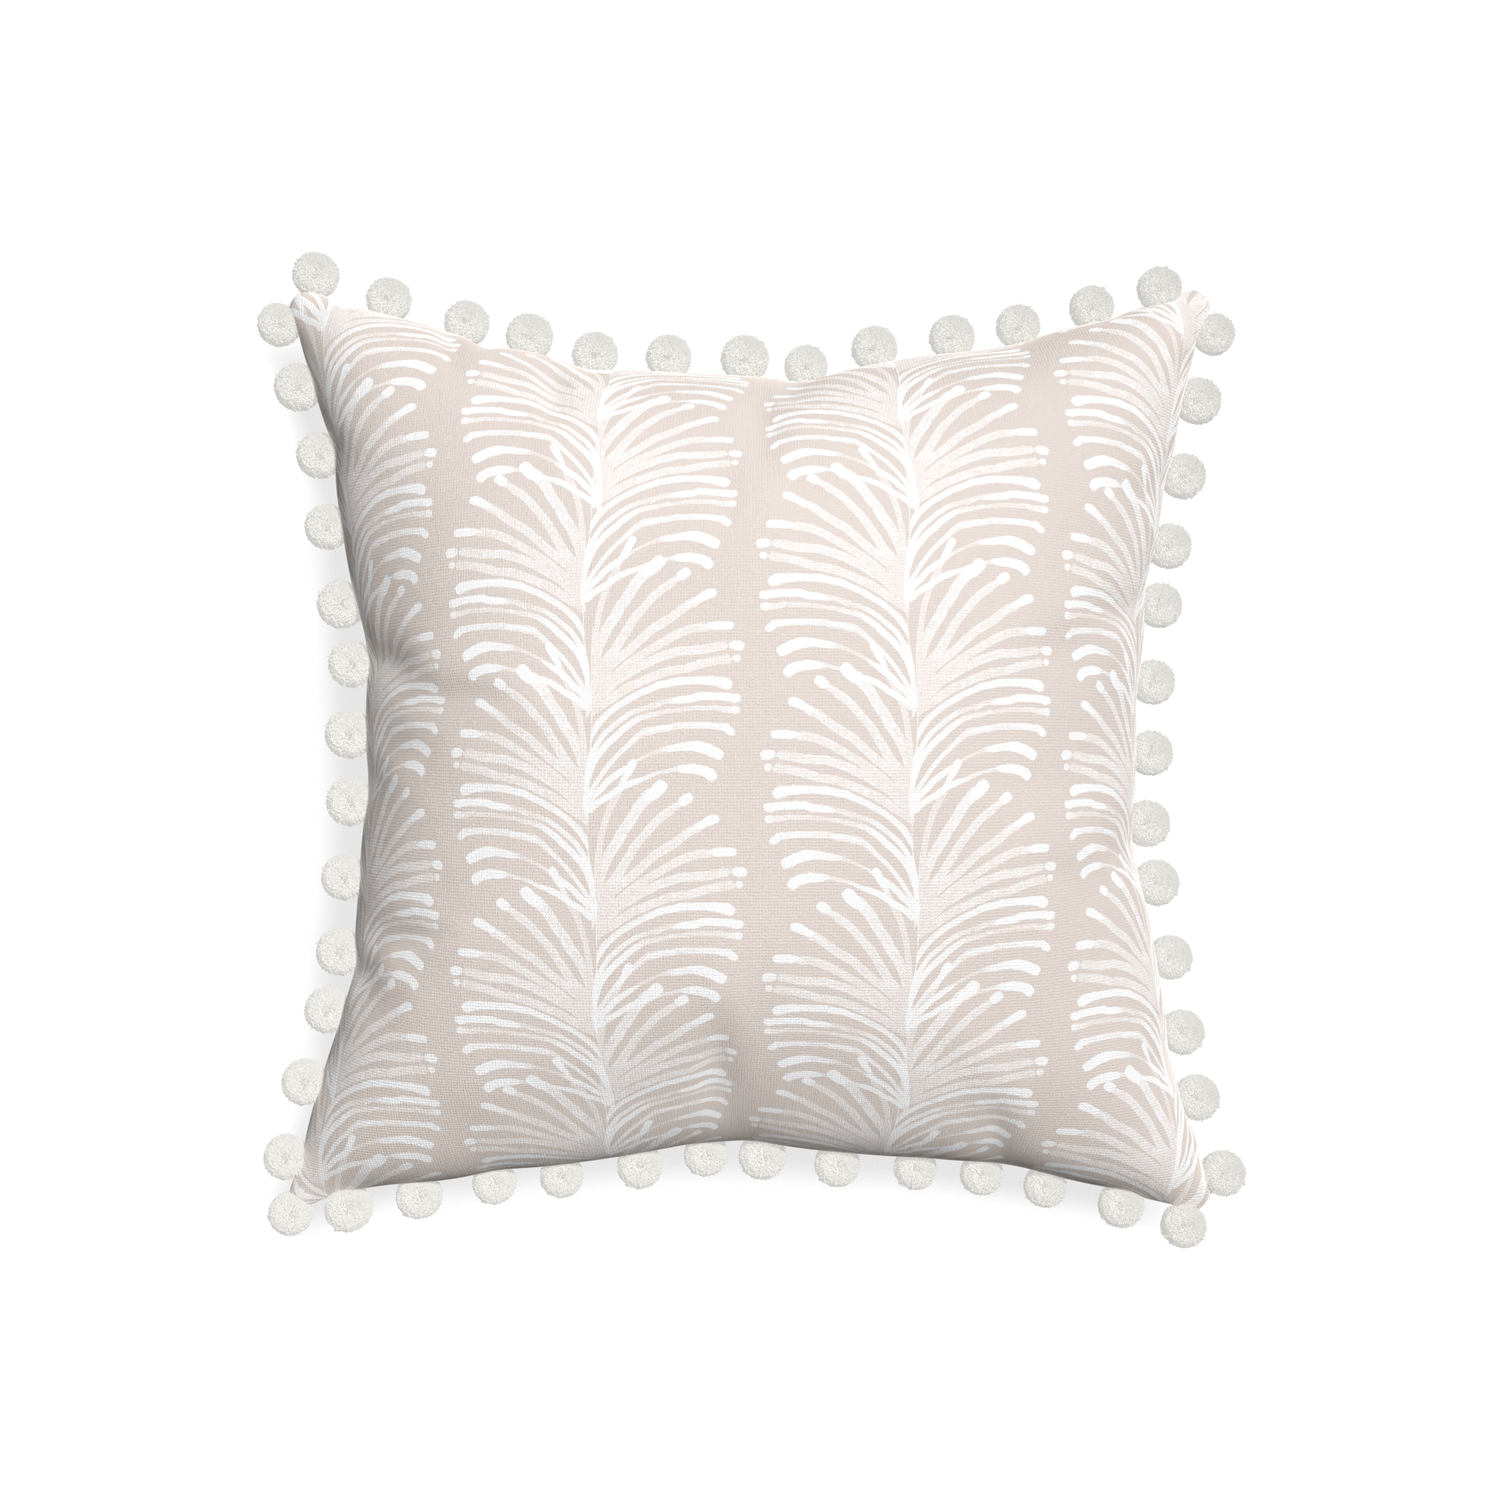 20-square emma sand custom pillow with snow pom pom on white background